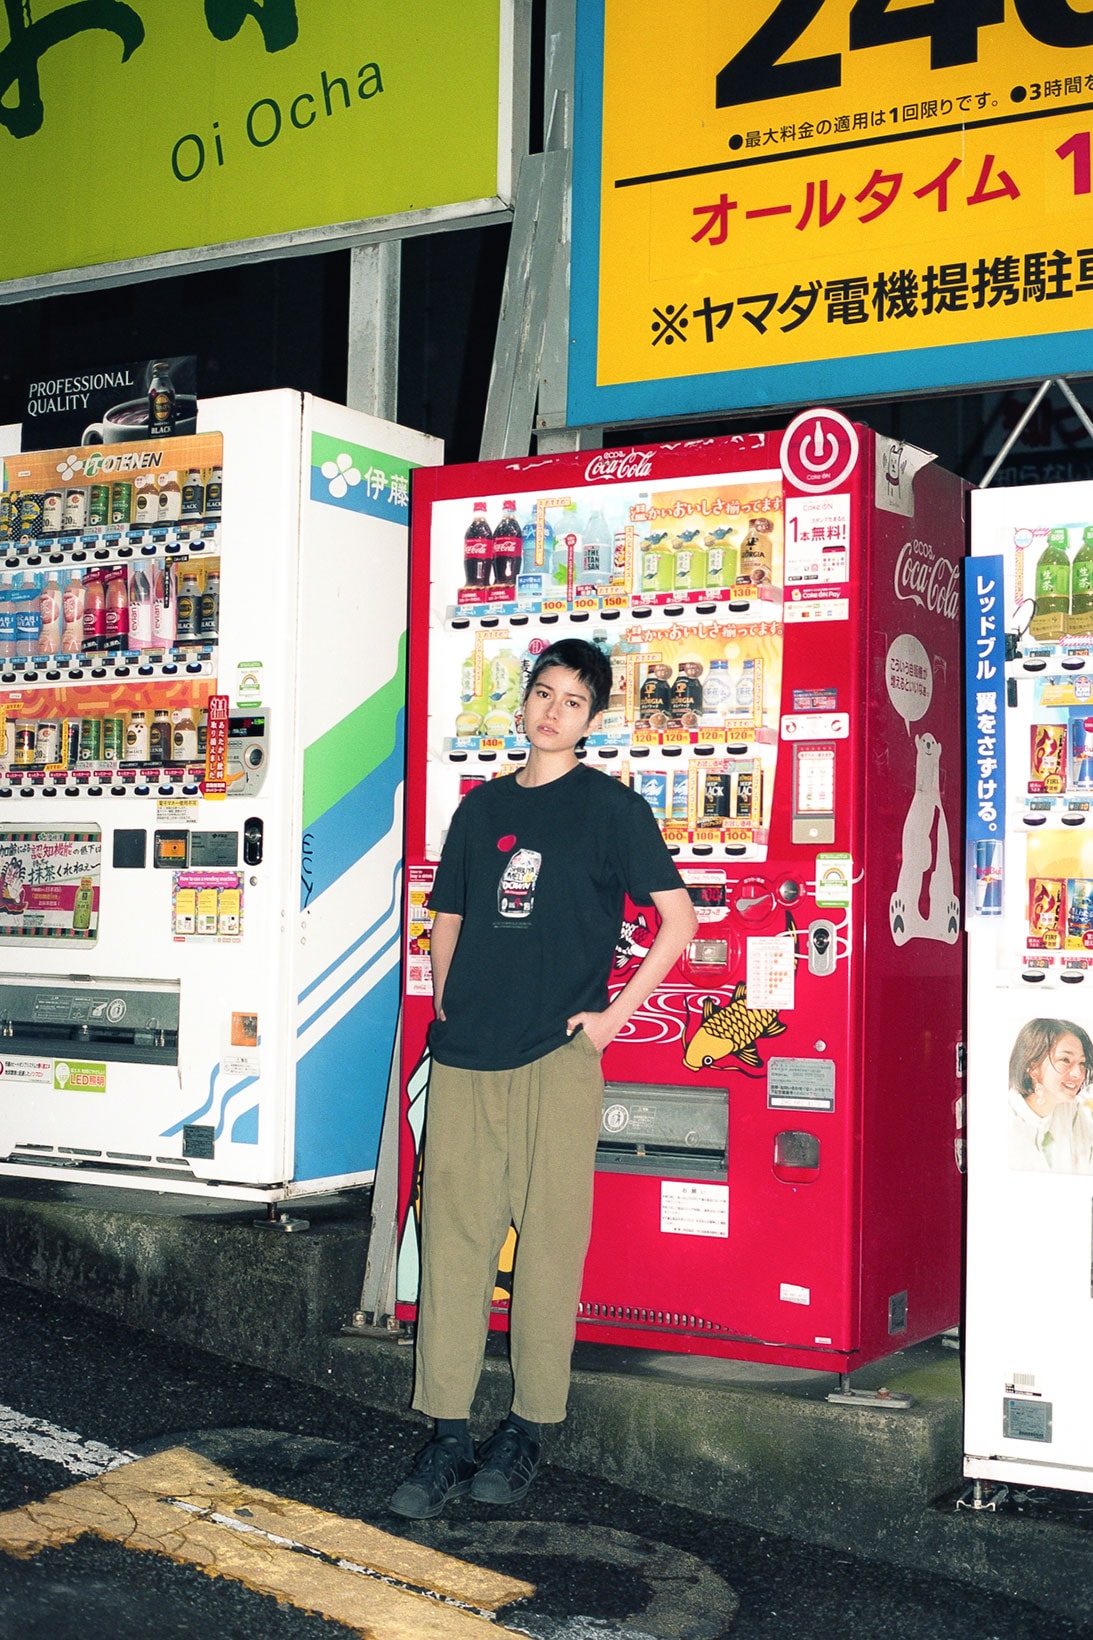 shibuya meltdown collection logo tee t shirt black pants vending machines